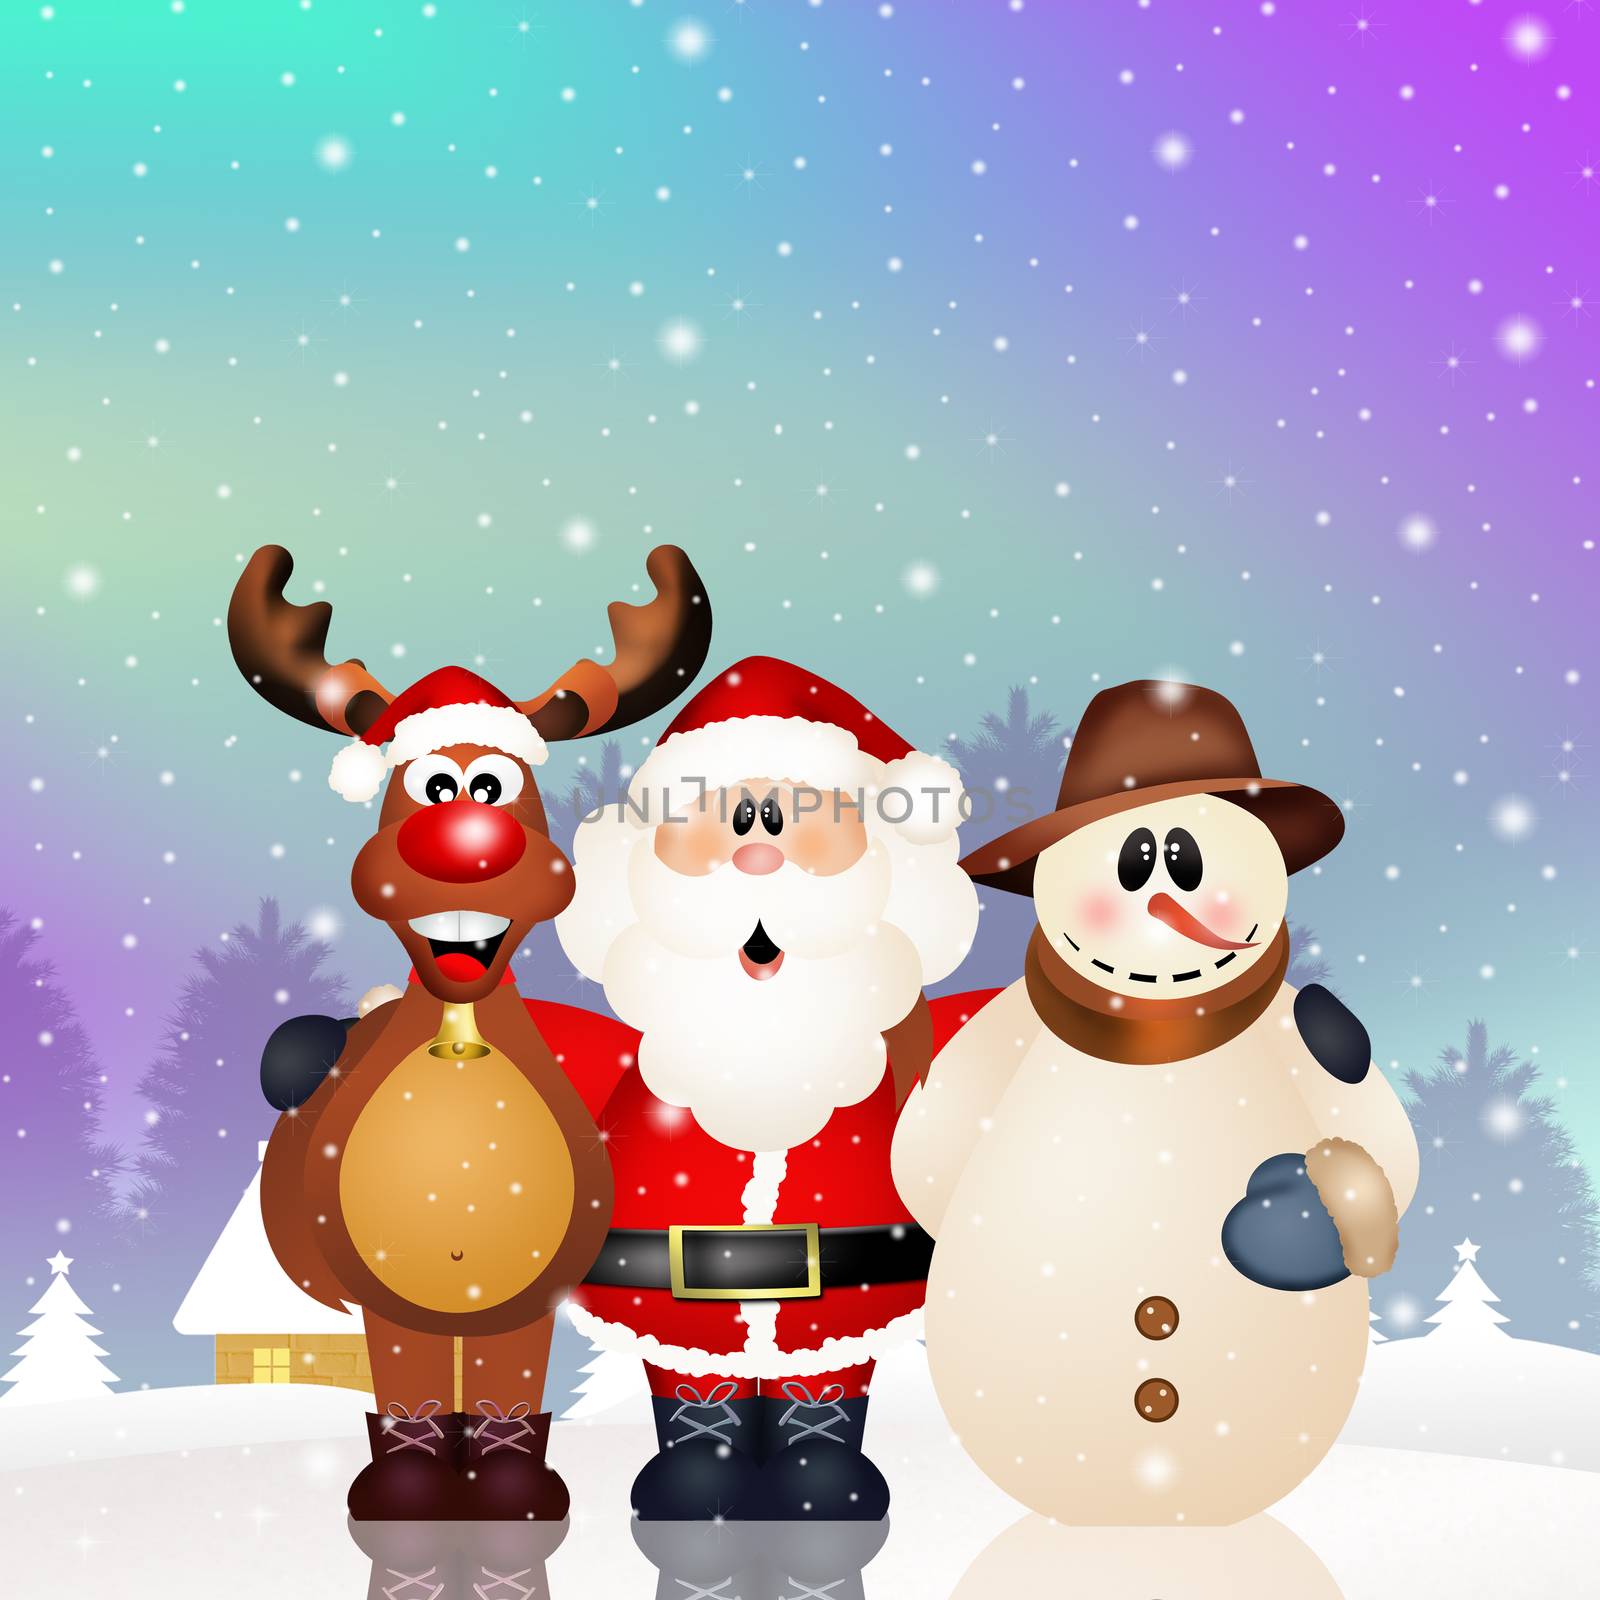 Santa Claus, snowman and reindeer by adrenalina